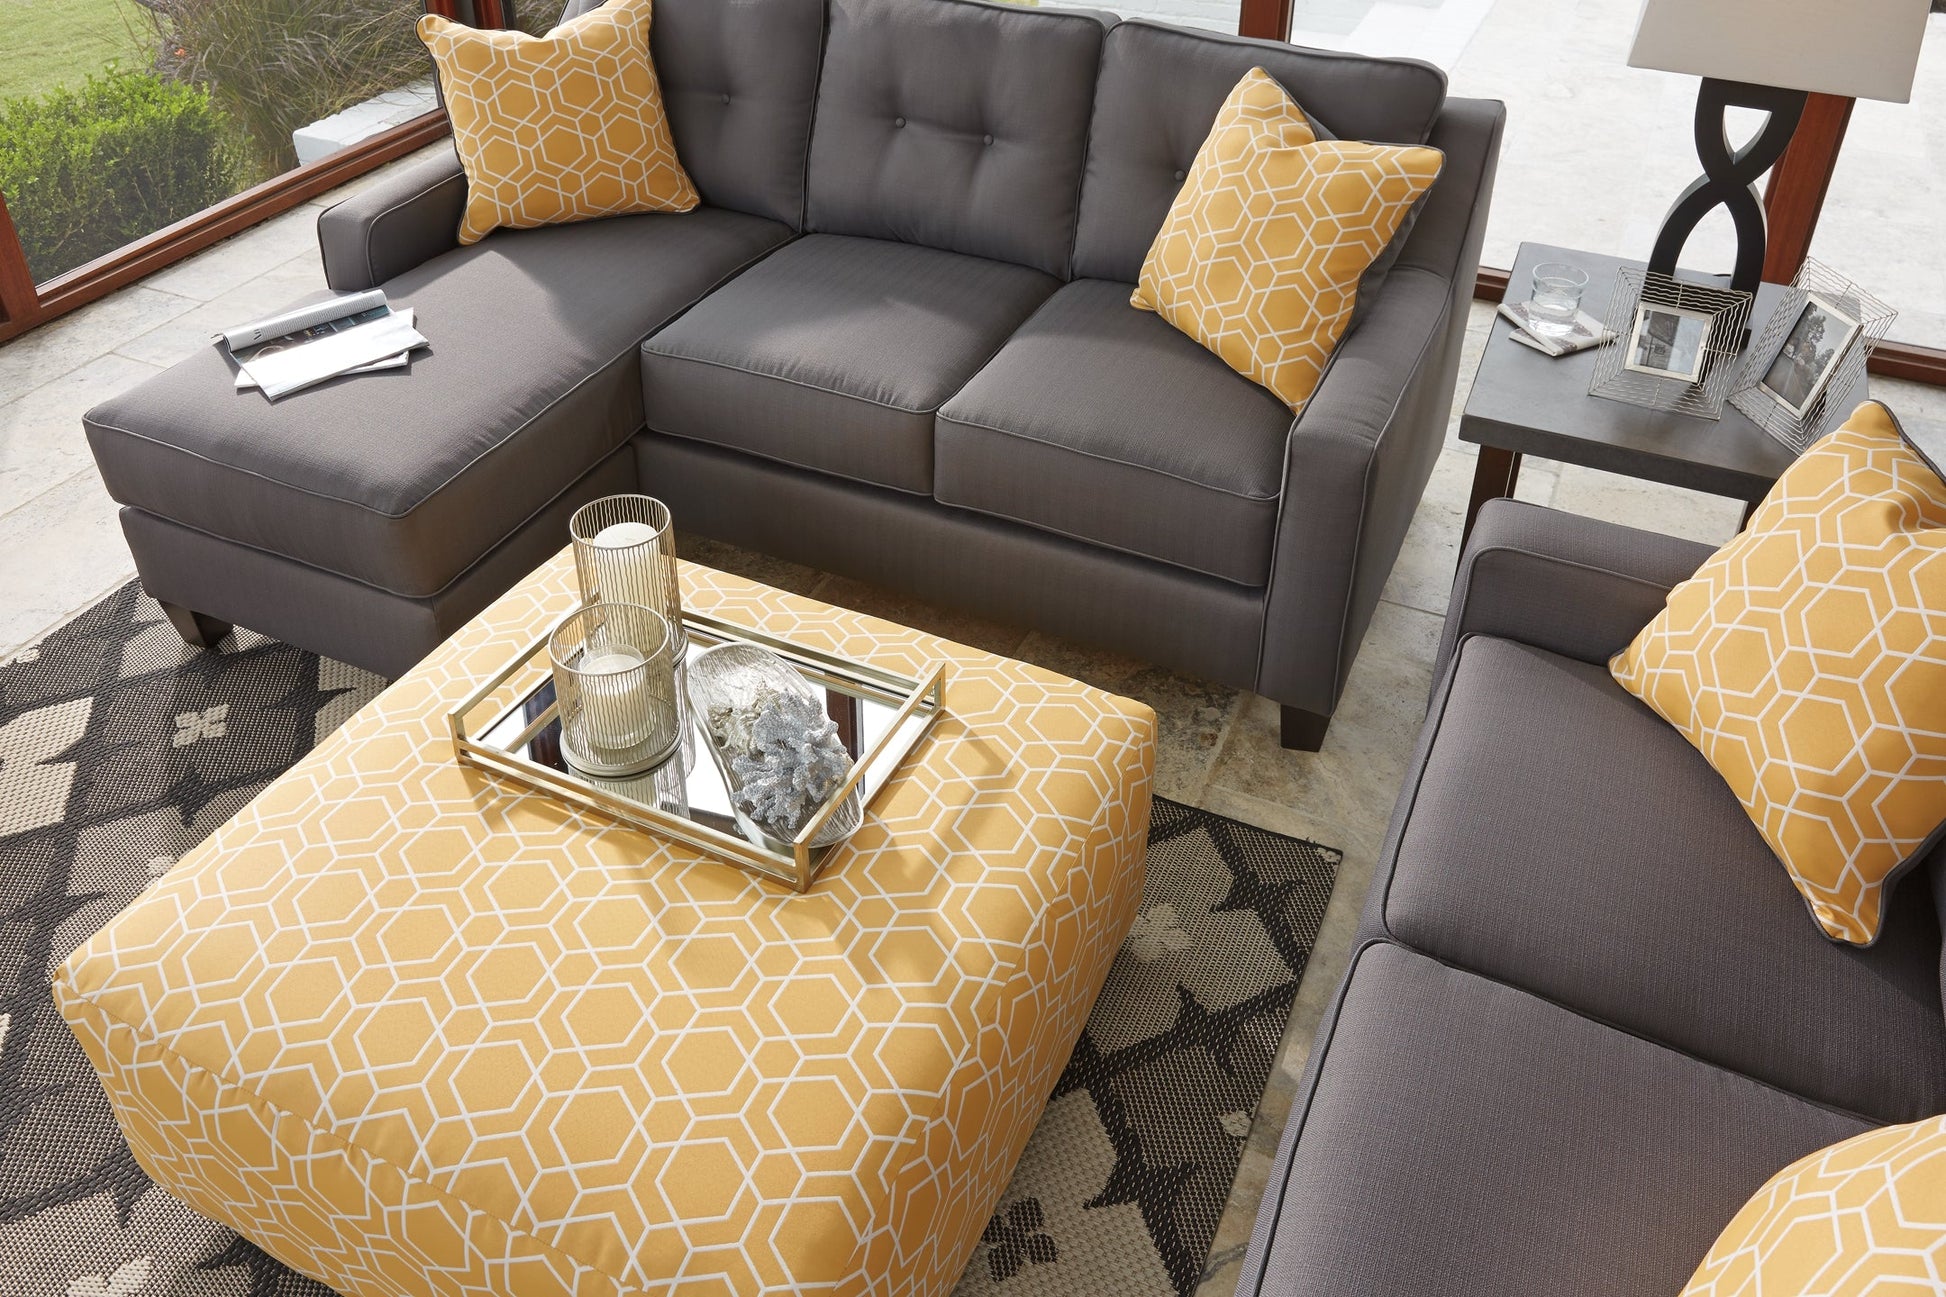 Derex Tray at Cloud 9 Mattress & Furniture furniture, home furnishing, home decor